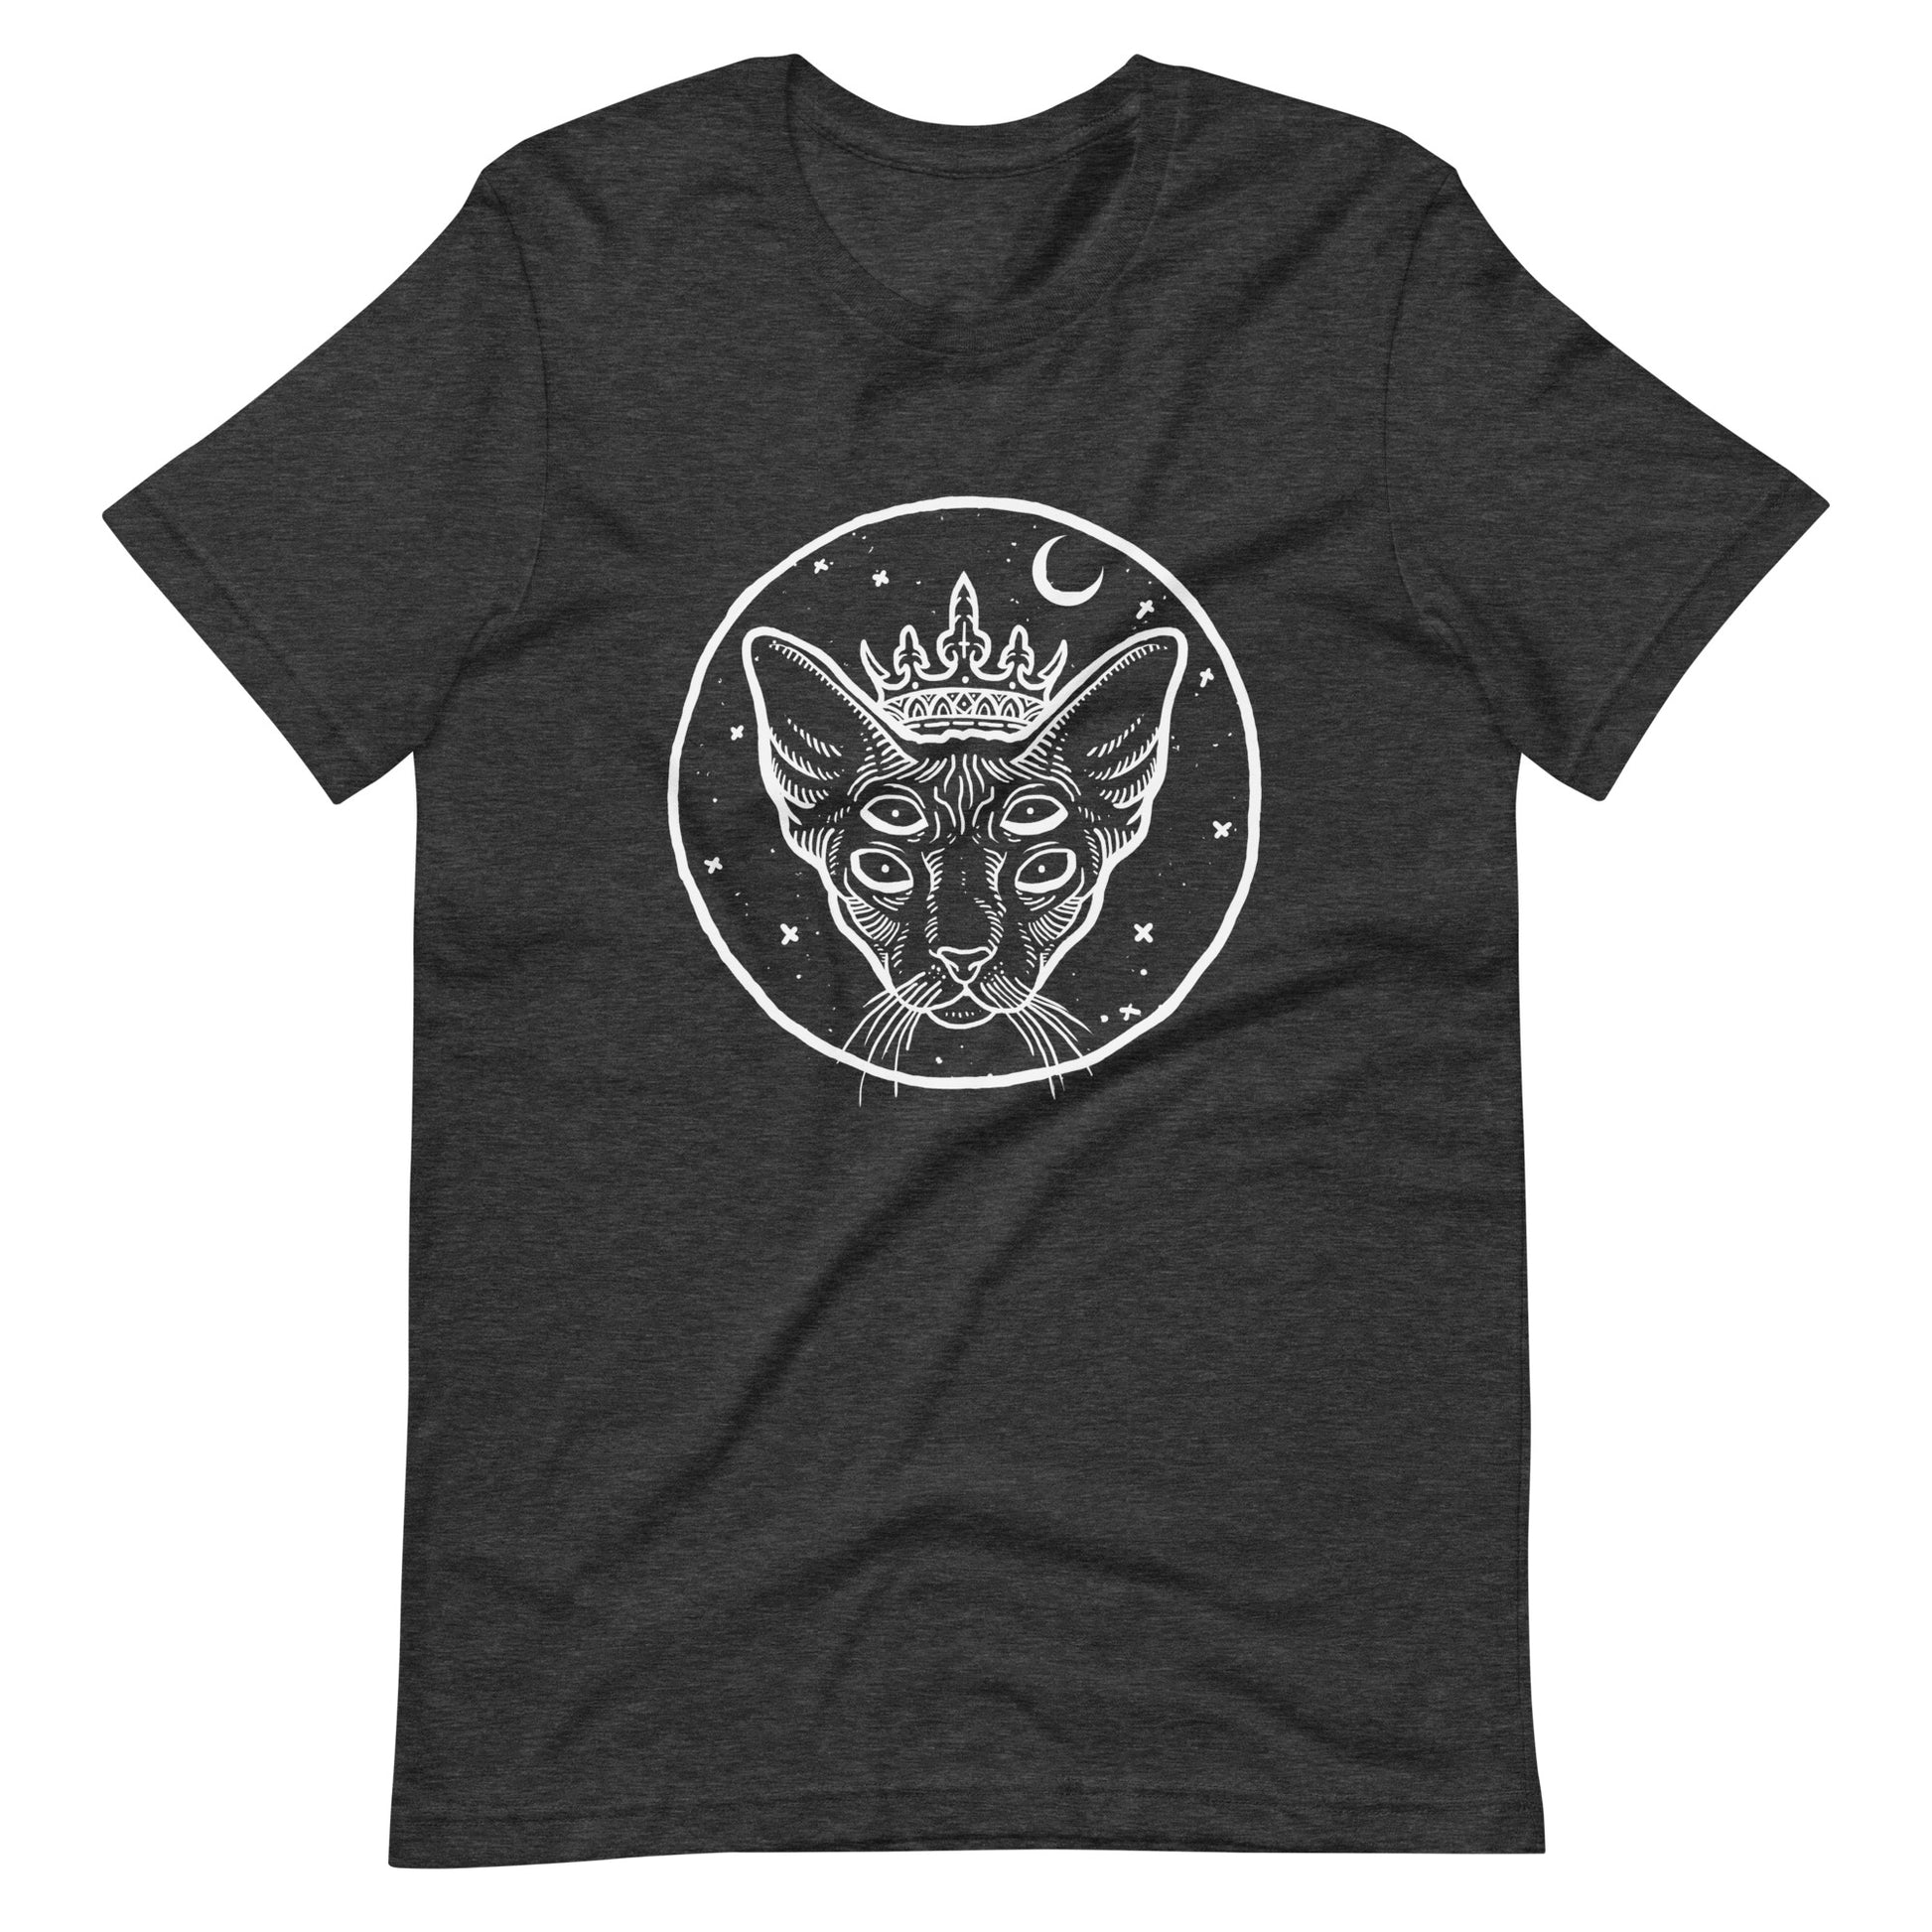 The Ruler - Men's t-shirt - Dark Grey Heather Front